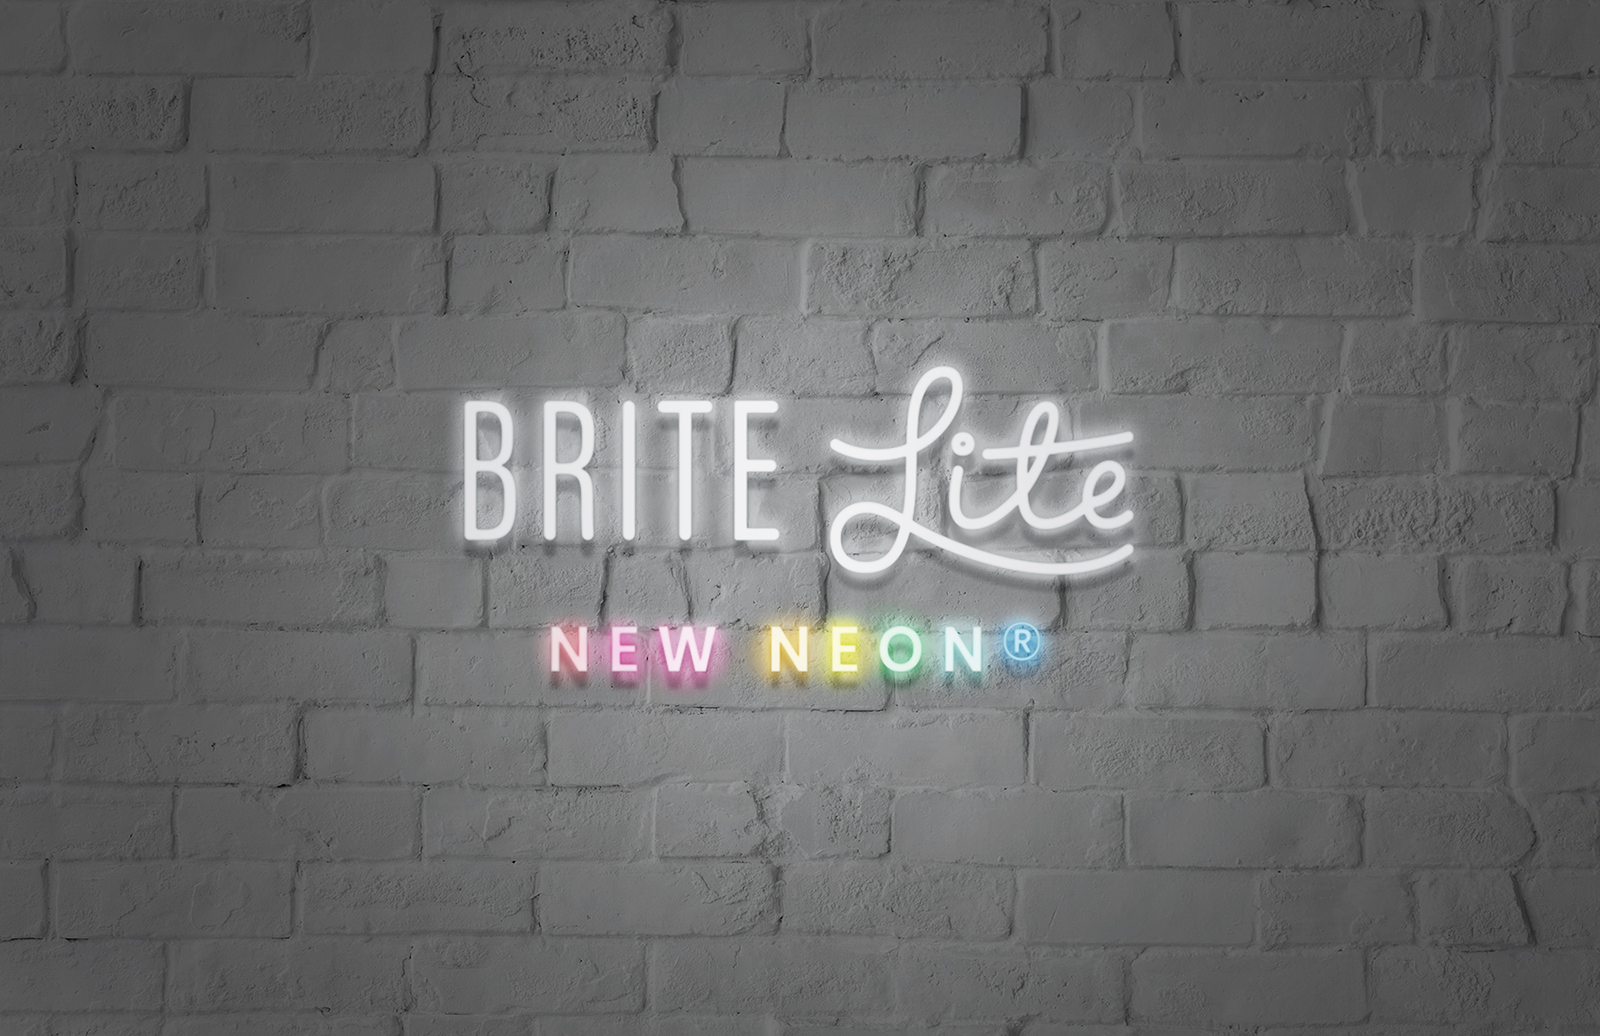 "Brite Lite New Neon" neon sign on white brick wall